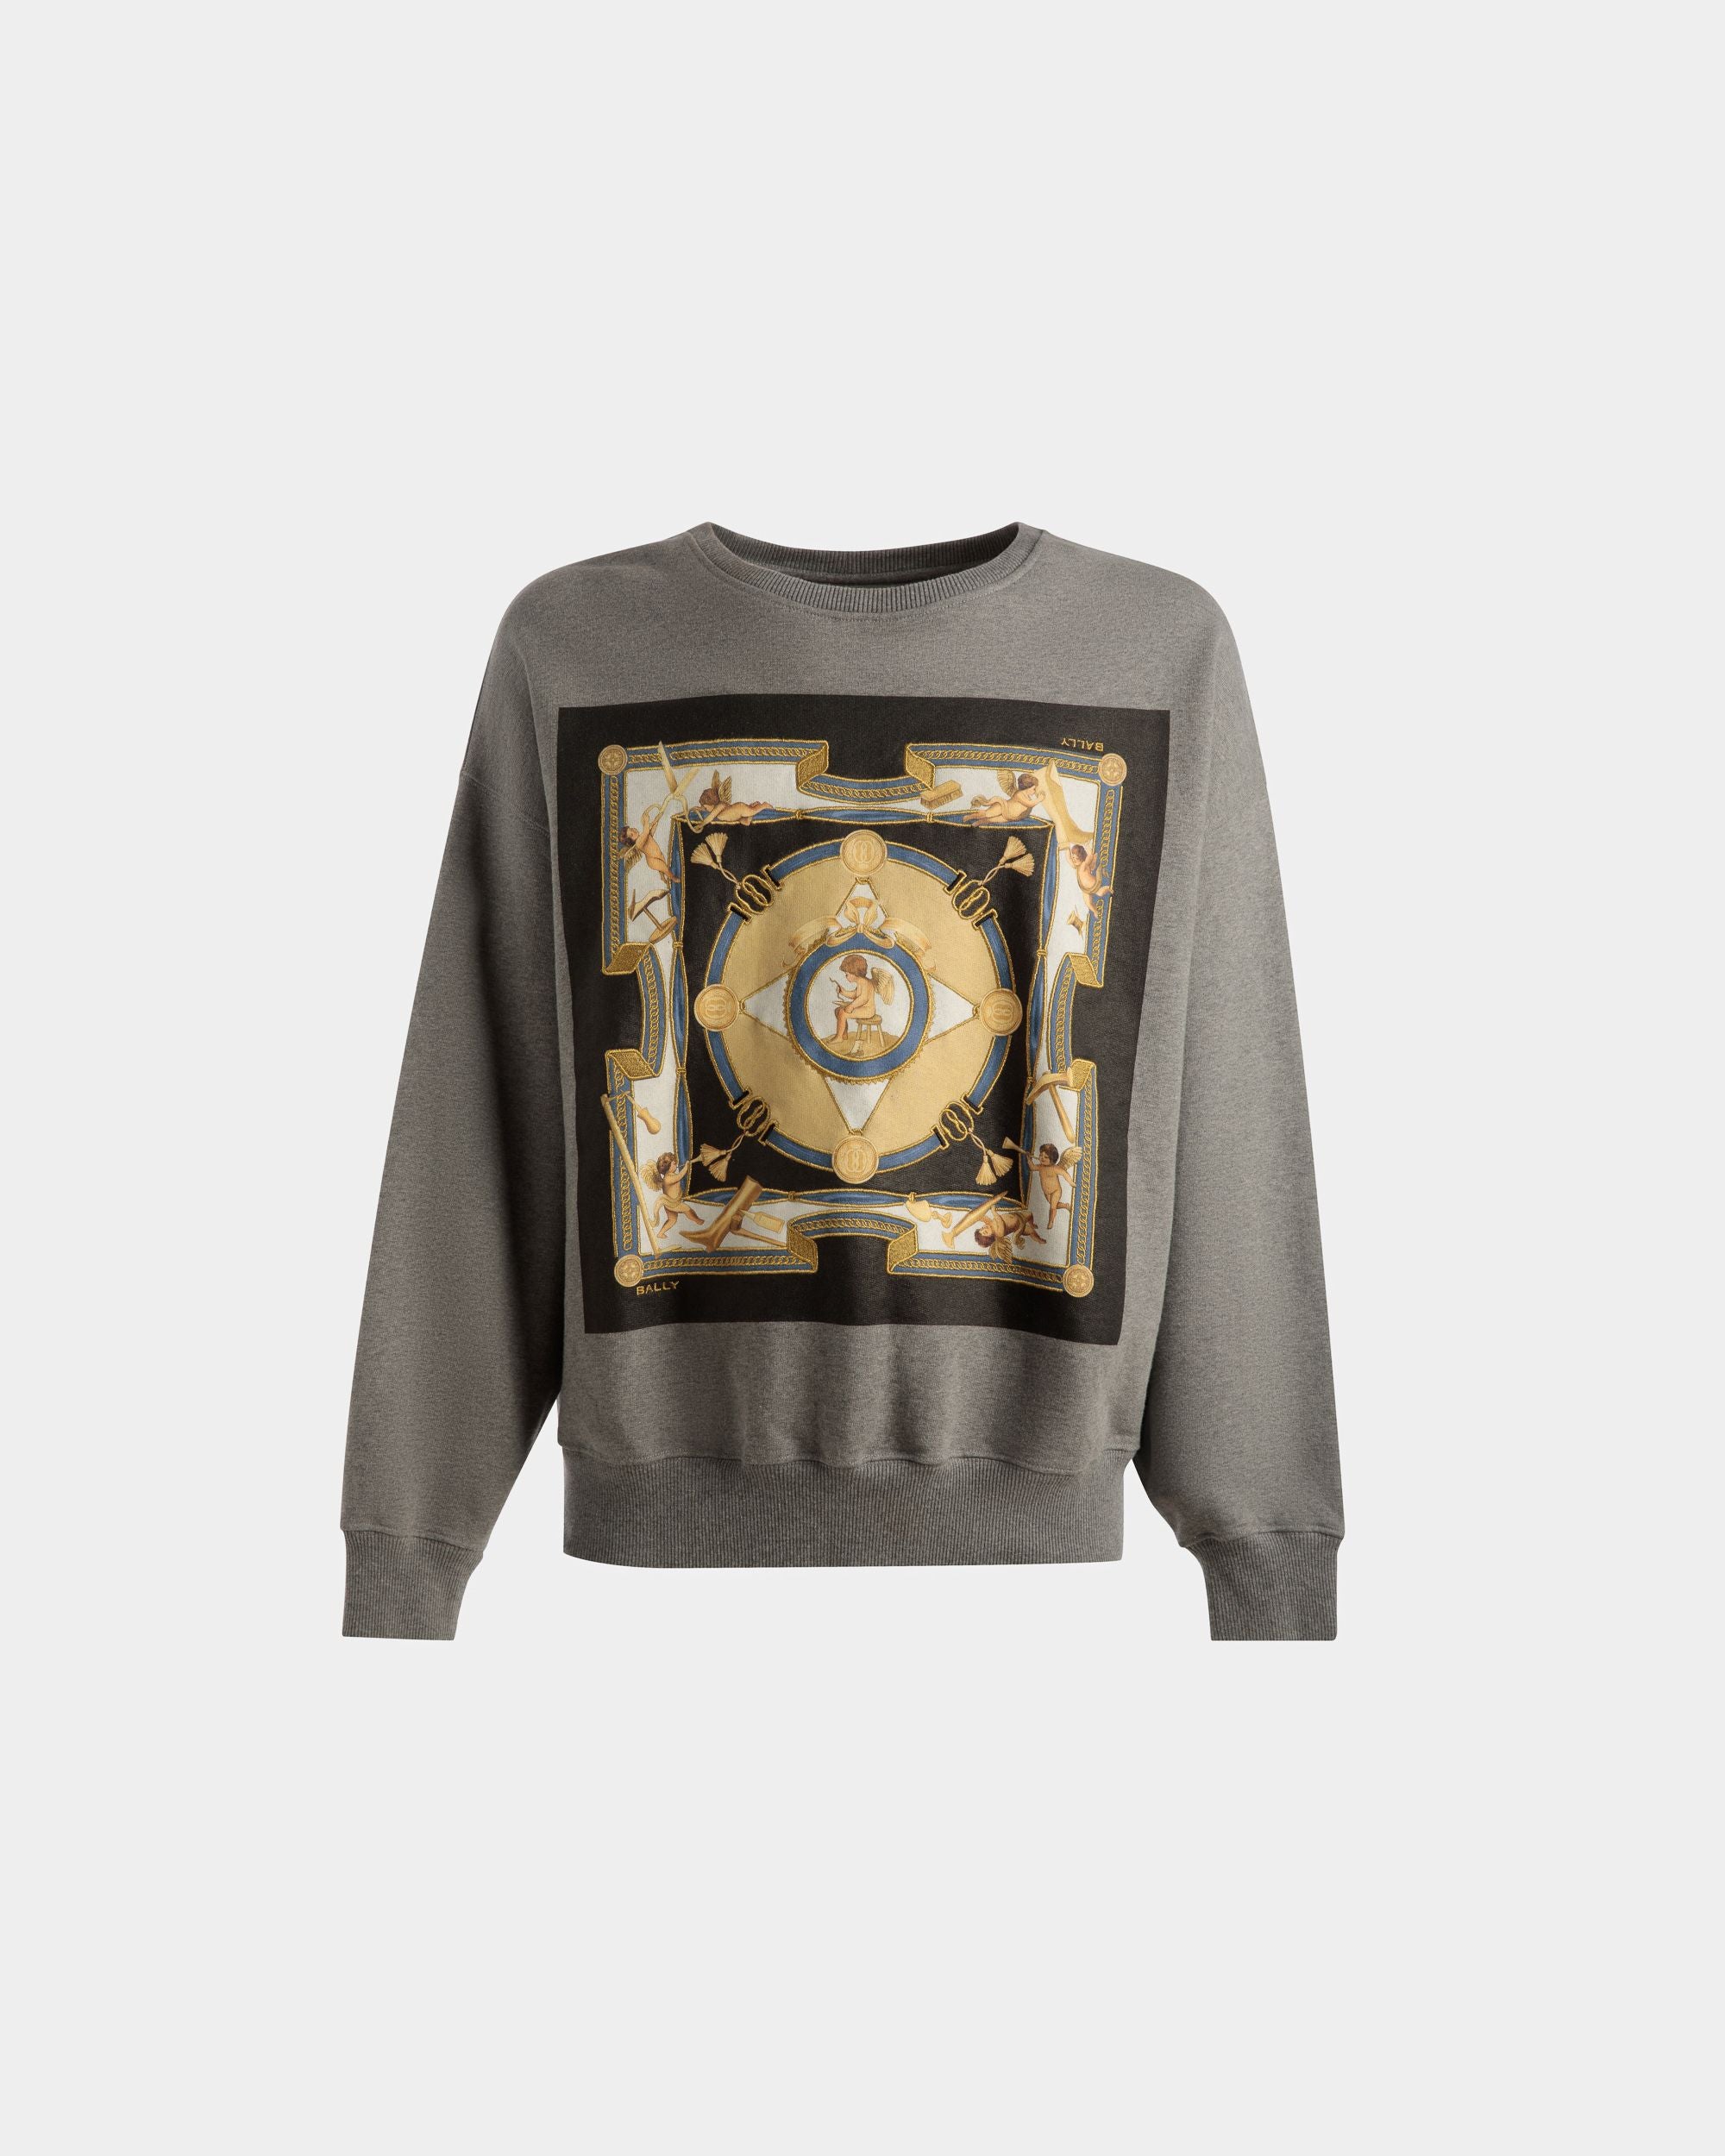 Printed Sweatshirt | Men's Sweatshirt | Grey Melange Cotton | Bally | Still Life Front